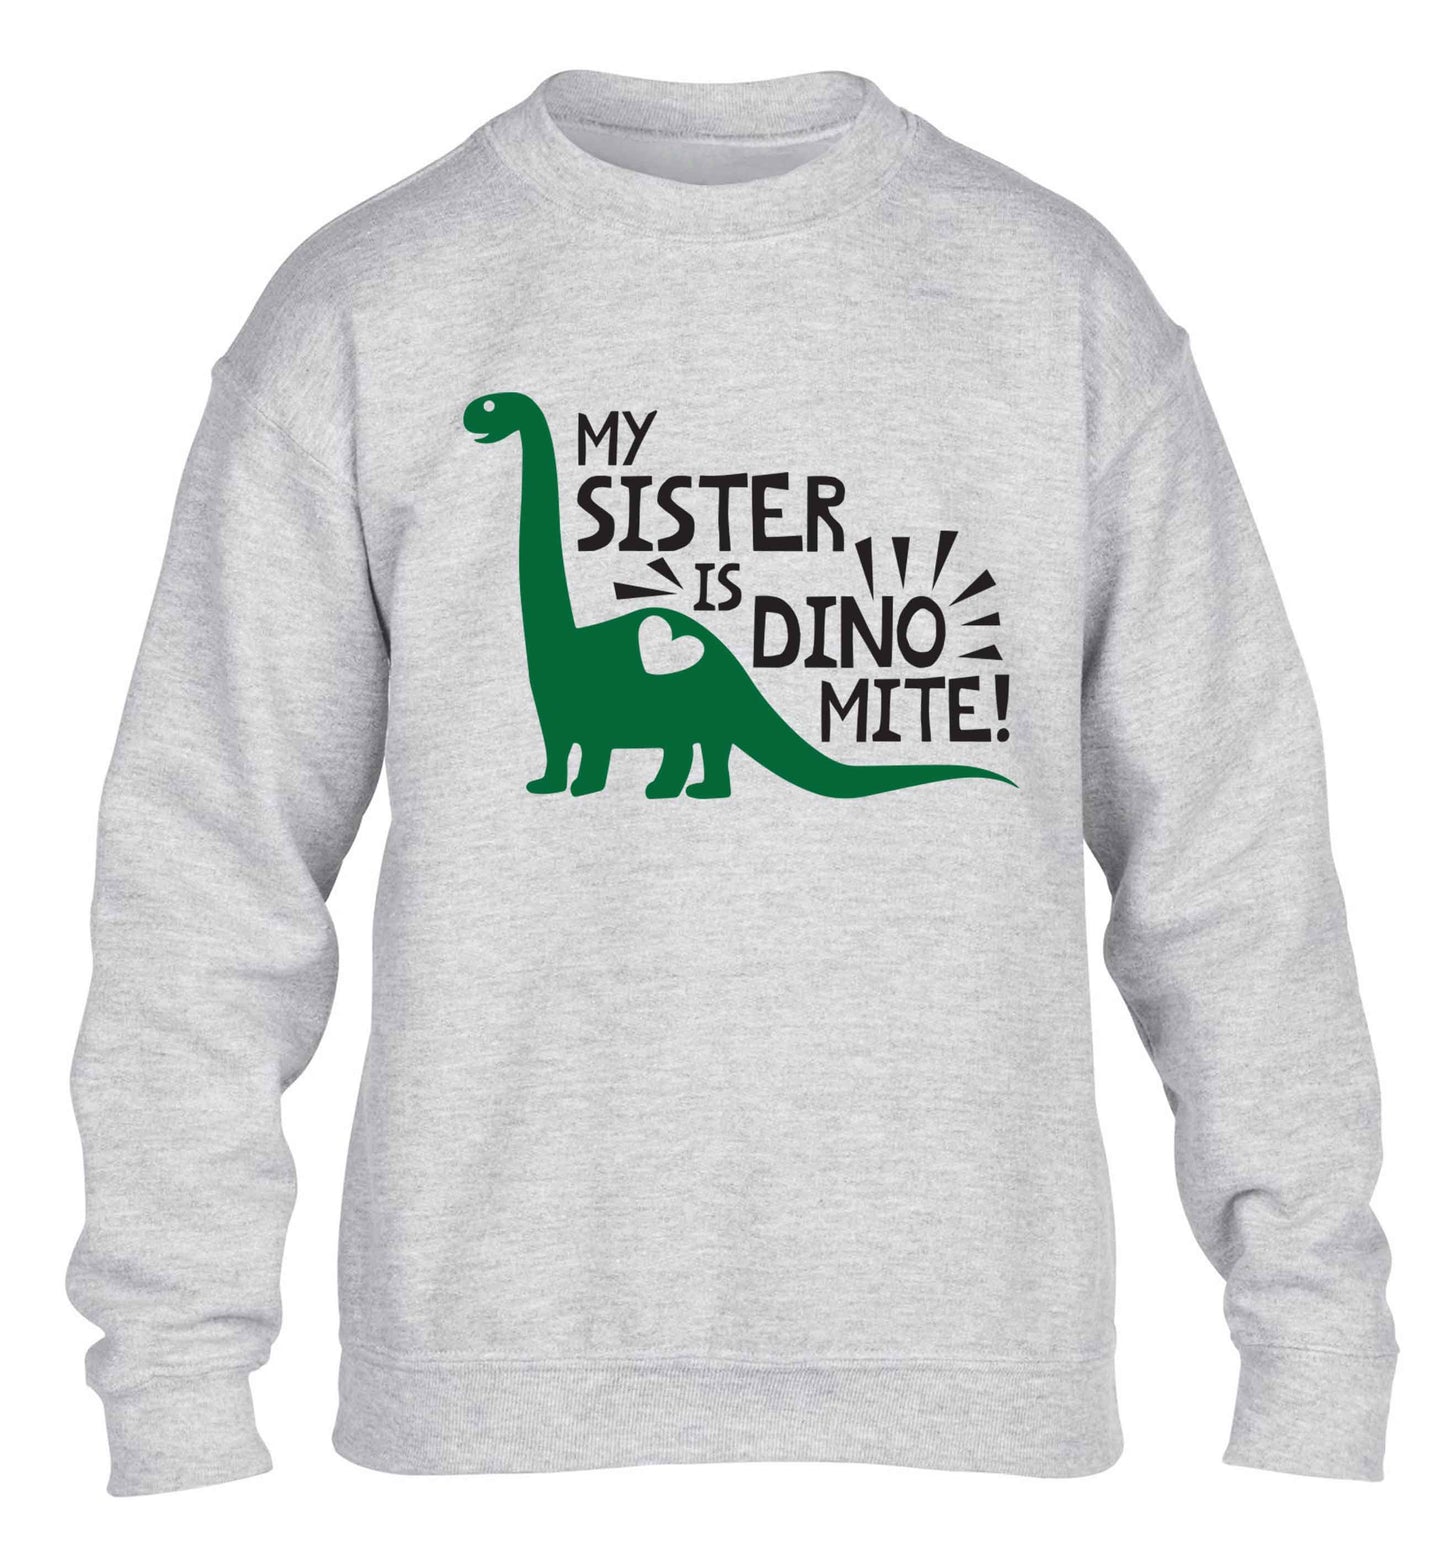 My sister is dinomite! children's grey sweater 12-13 Years